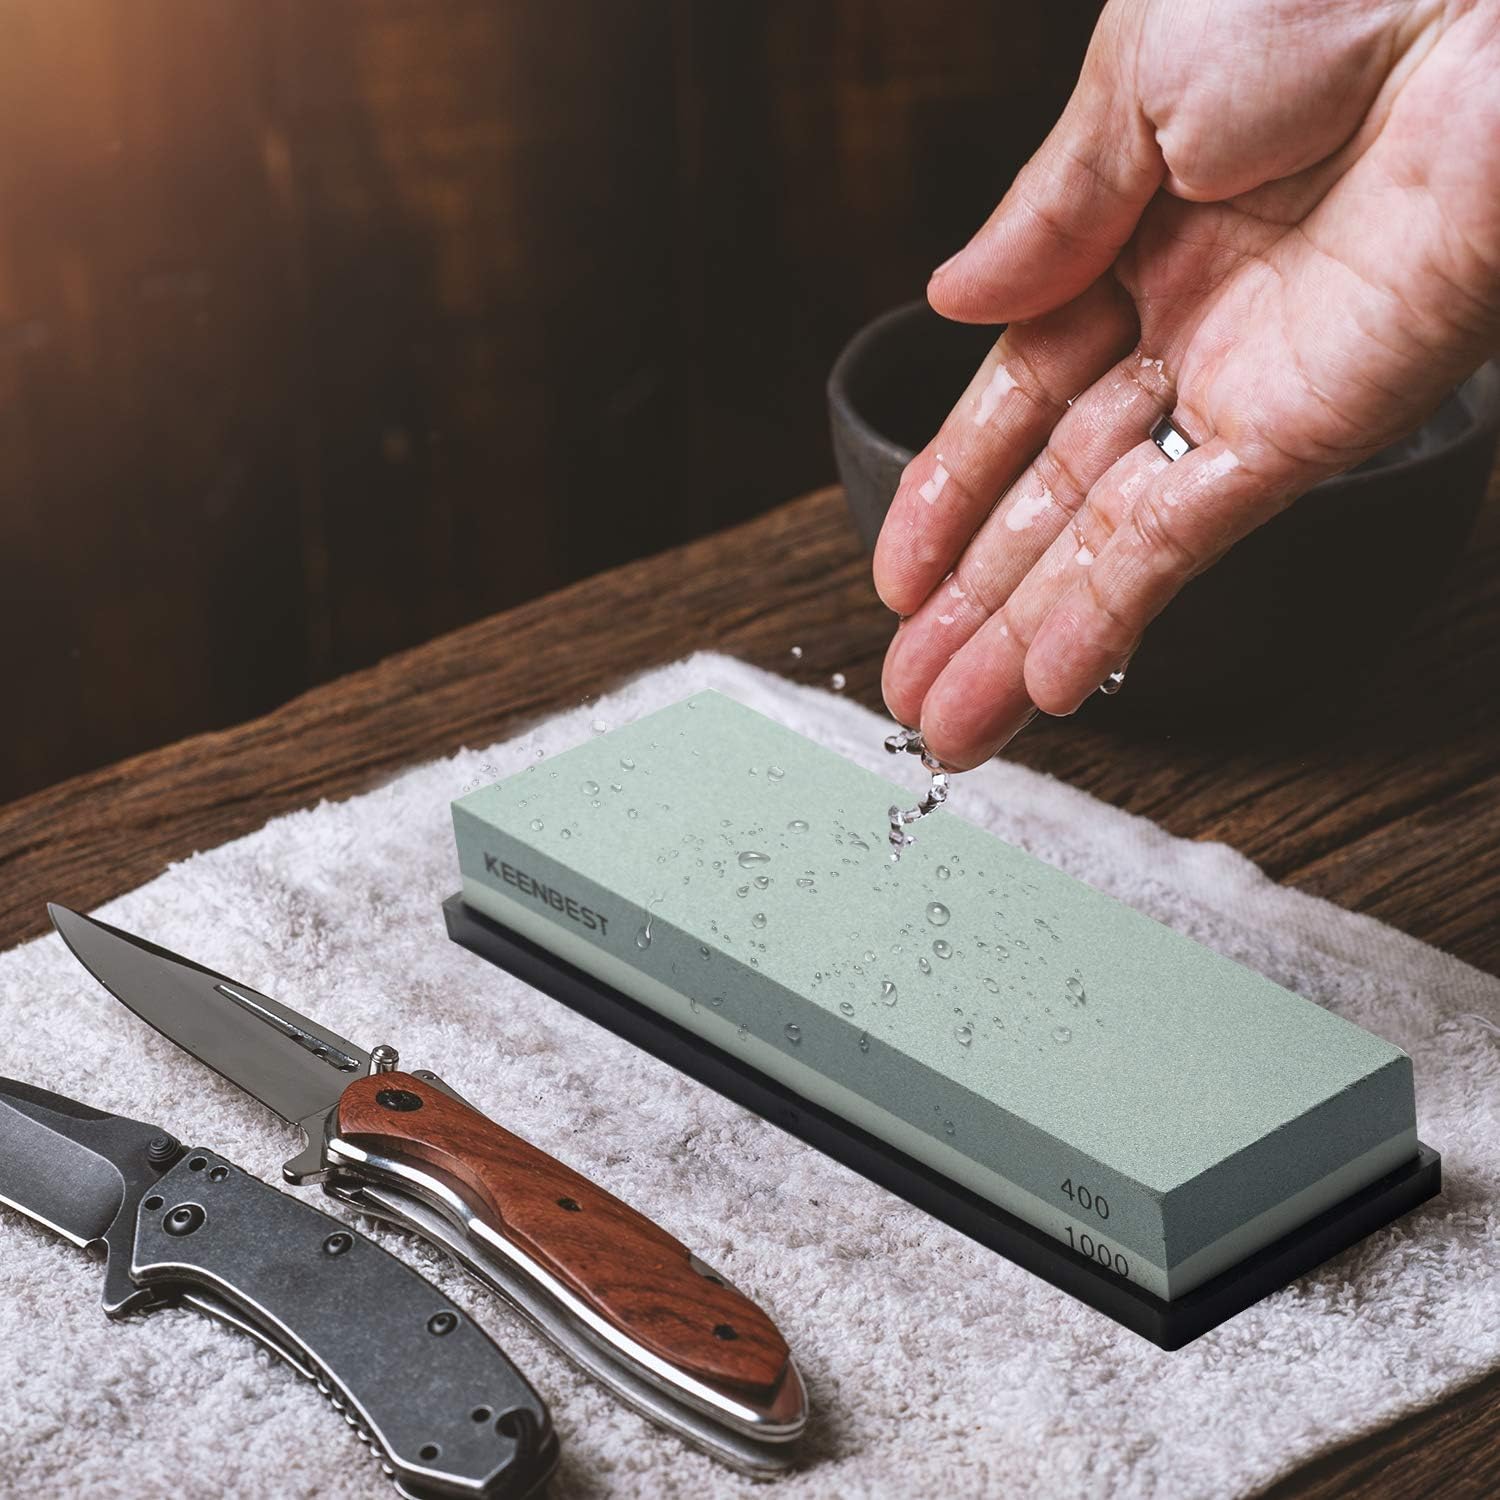 KEENBEST Sharpening Stone Whetstone Set 2 Side Grit 400 1000 3000 8000  Professional Kitchen Knife Sharpener